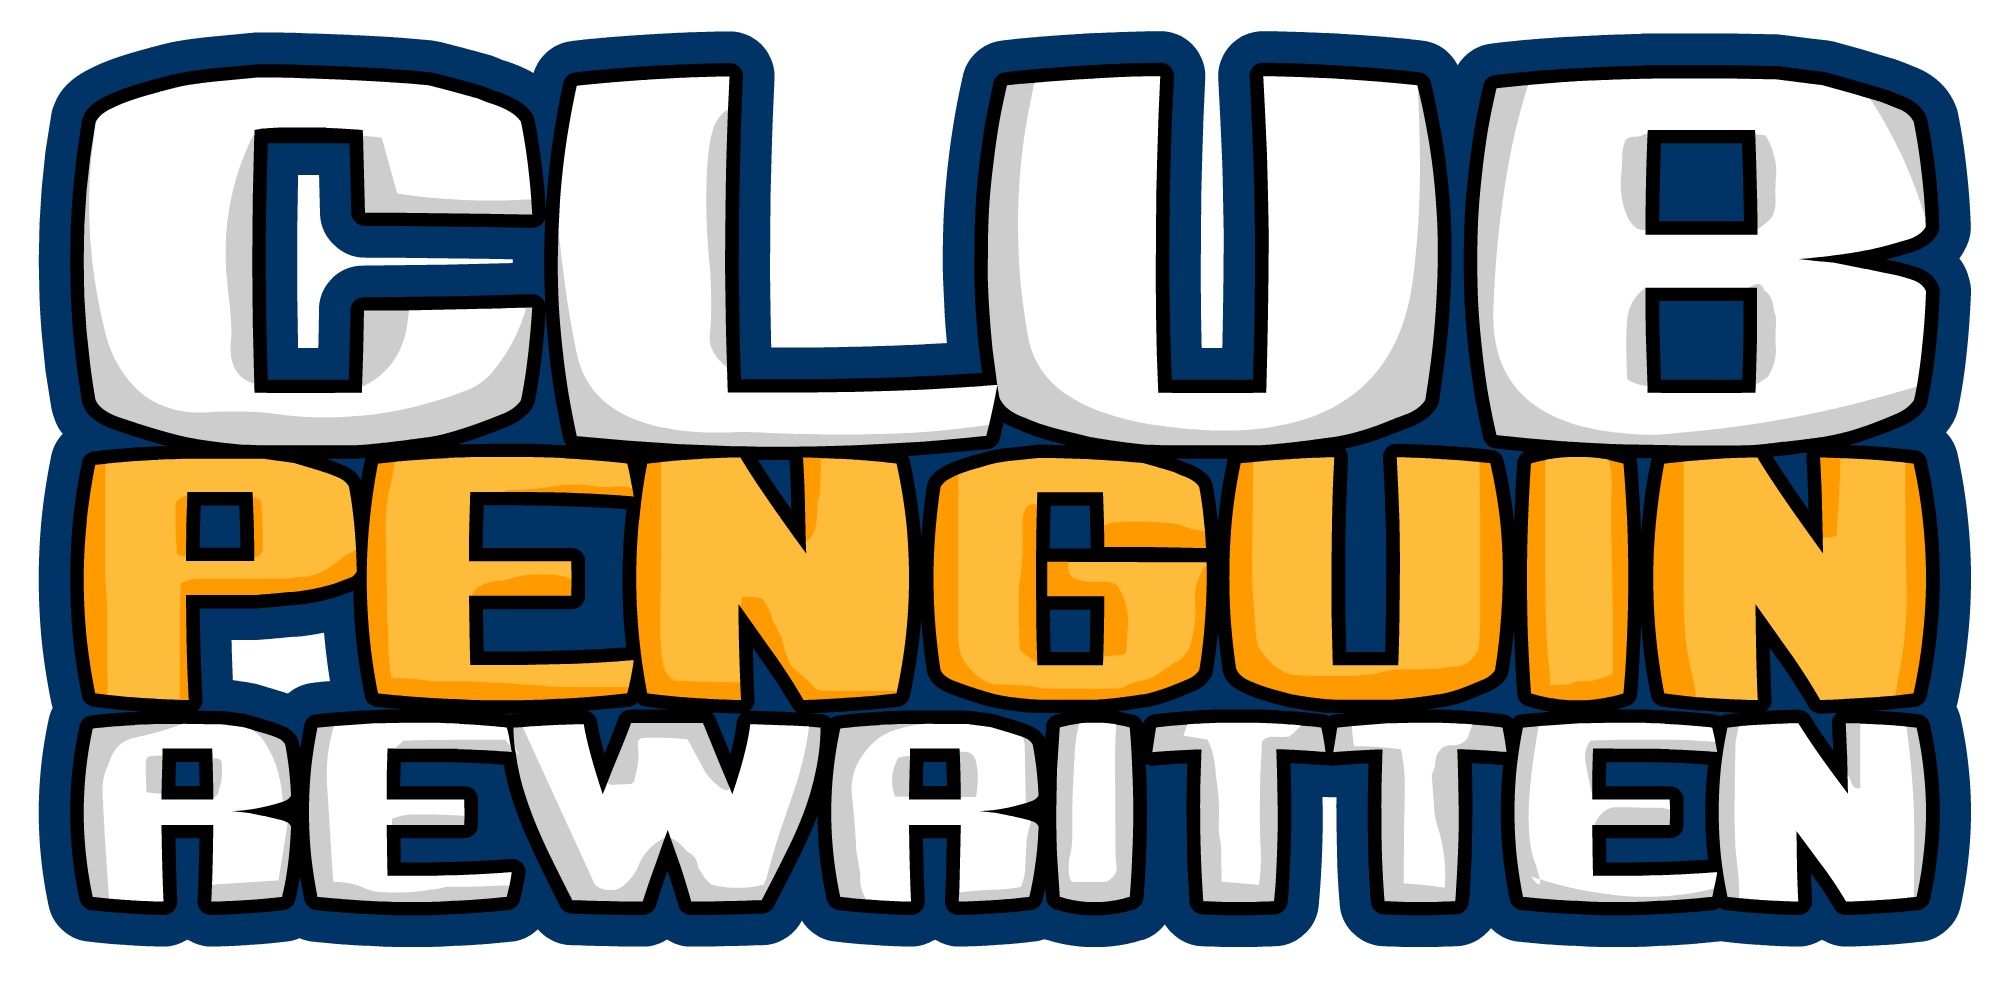 Club Penguin Rewritten - Wikipedia